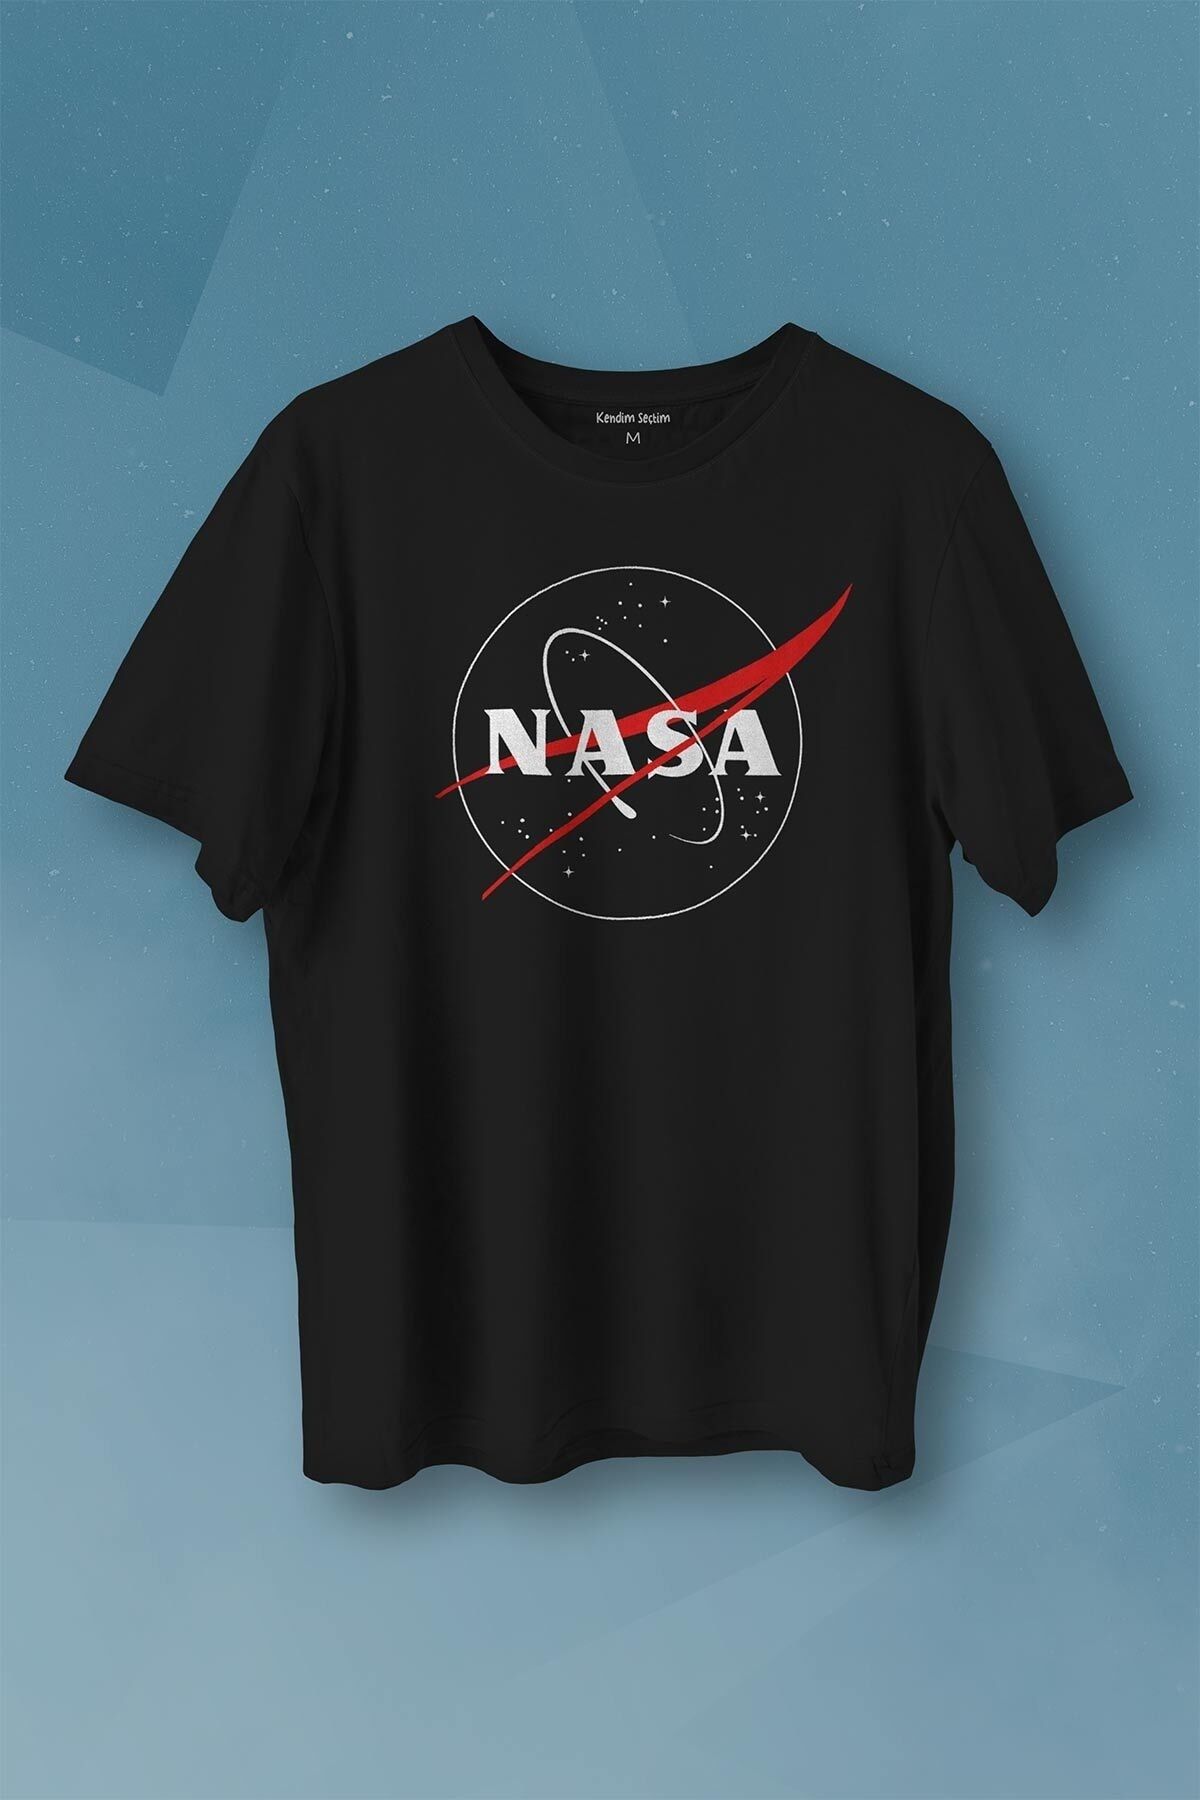 Kendim Seçtim Nasa Logosu Siyah Kırmızı Uzay Cosmos Baskılı Tişört Unisex T-shirt